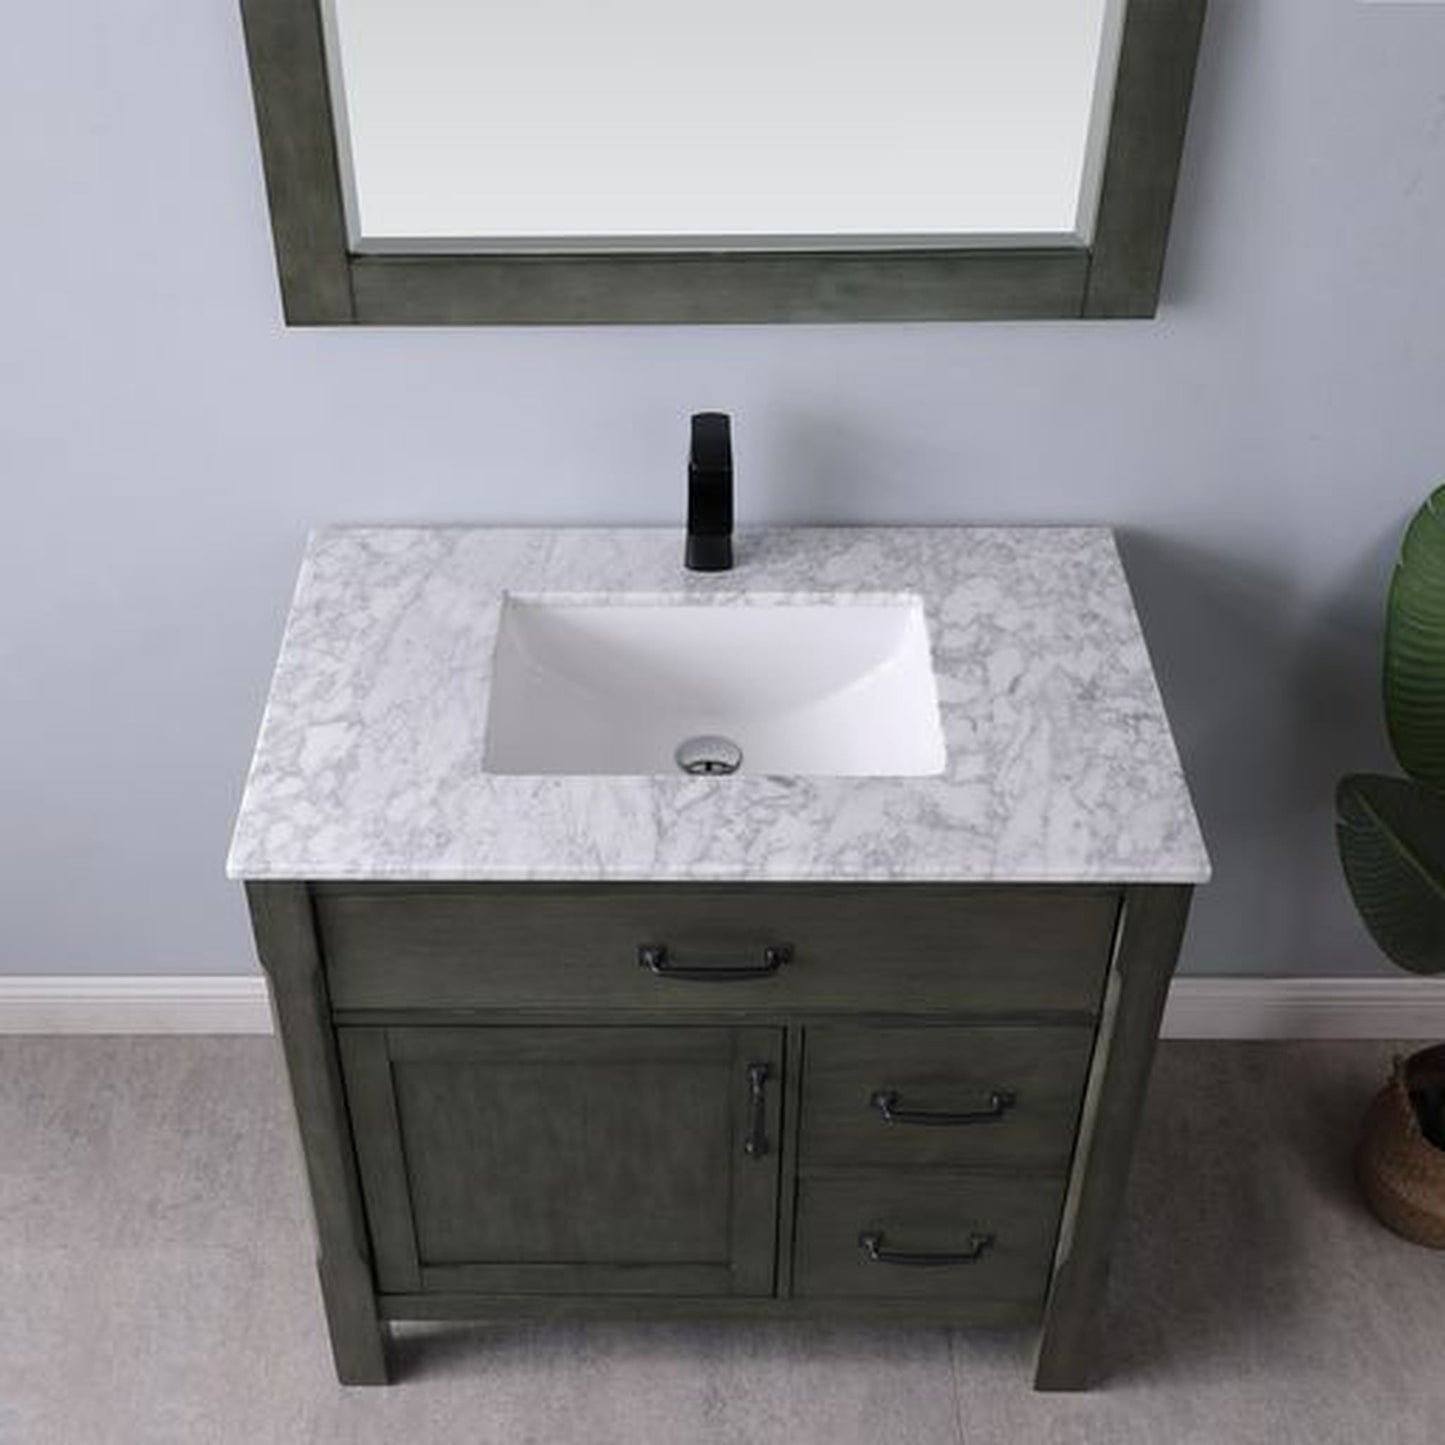 Altair Maribella 36" Single Rust Black Freestanding Bathroom Vanity Set With Mirror, Natural Carrara White Marble Top, Rectangular Undermount Ceramic Sink, and Overflow